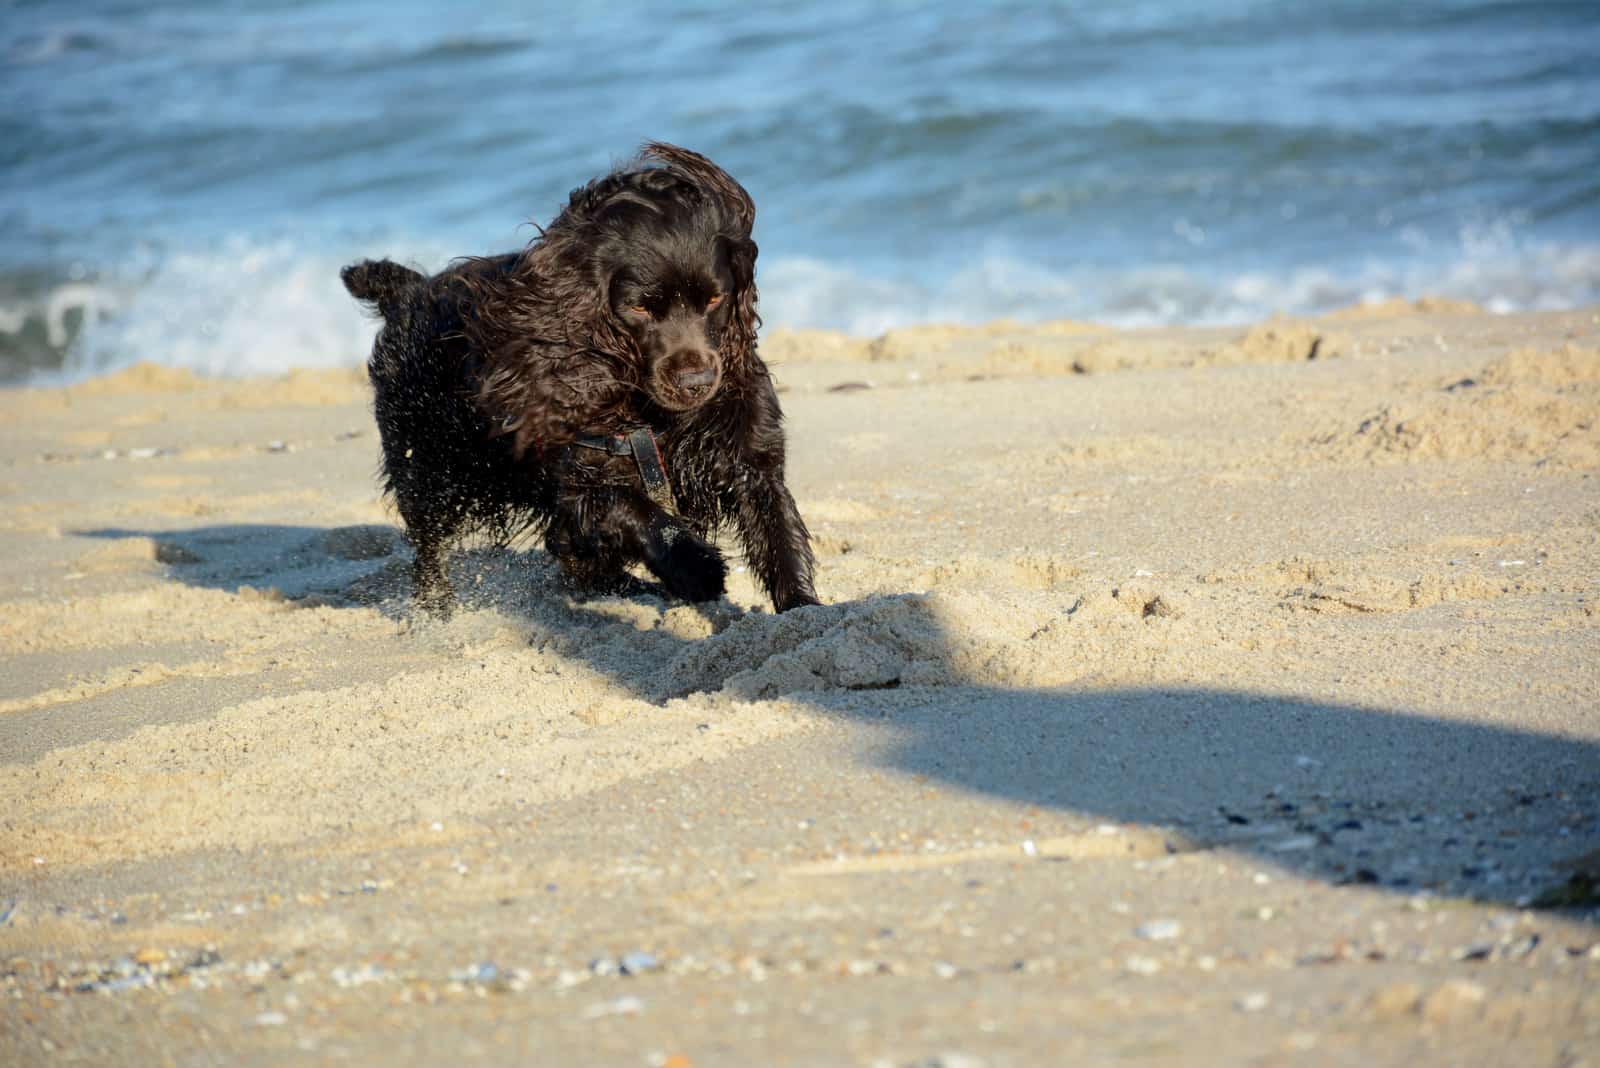 Boykin Spaniel running on the sandy beach